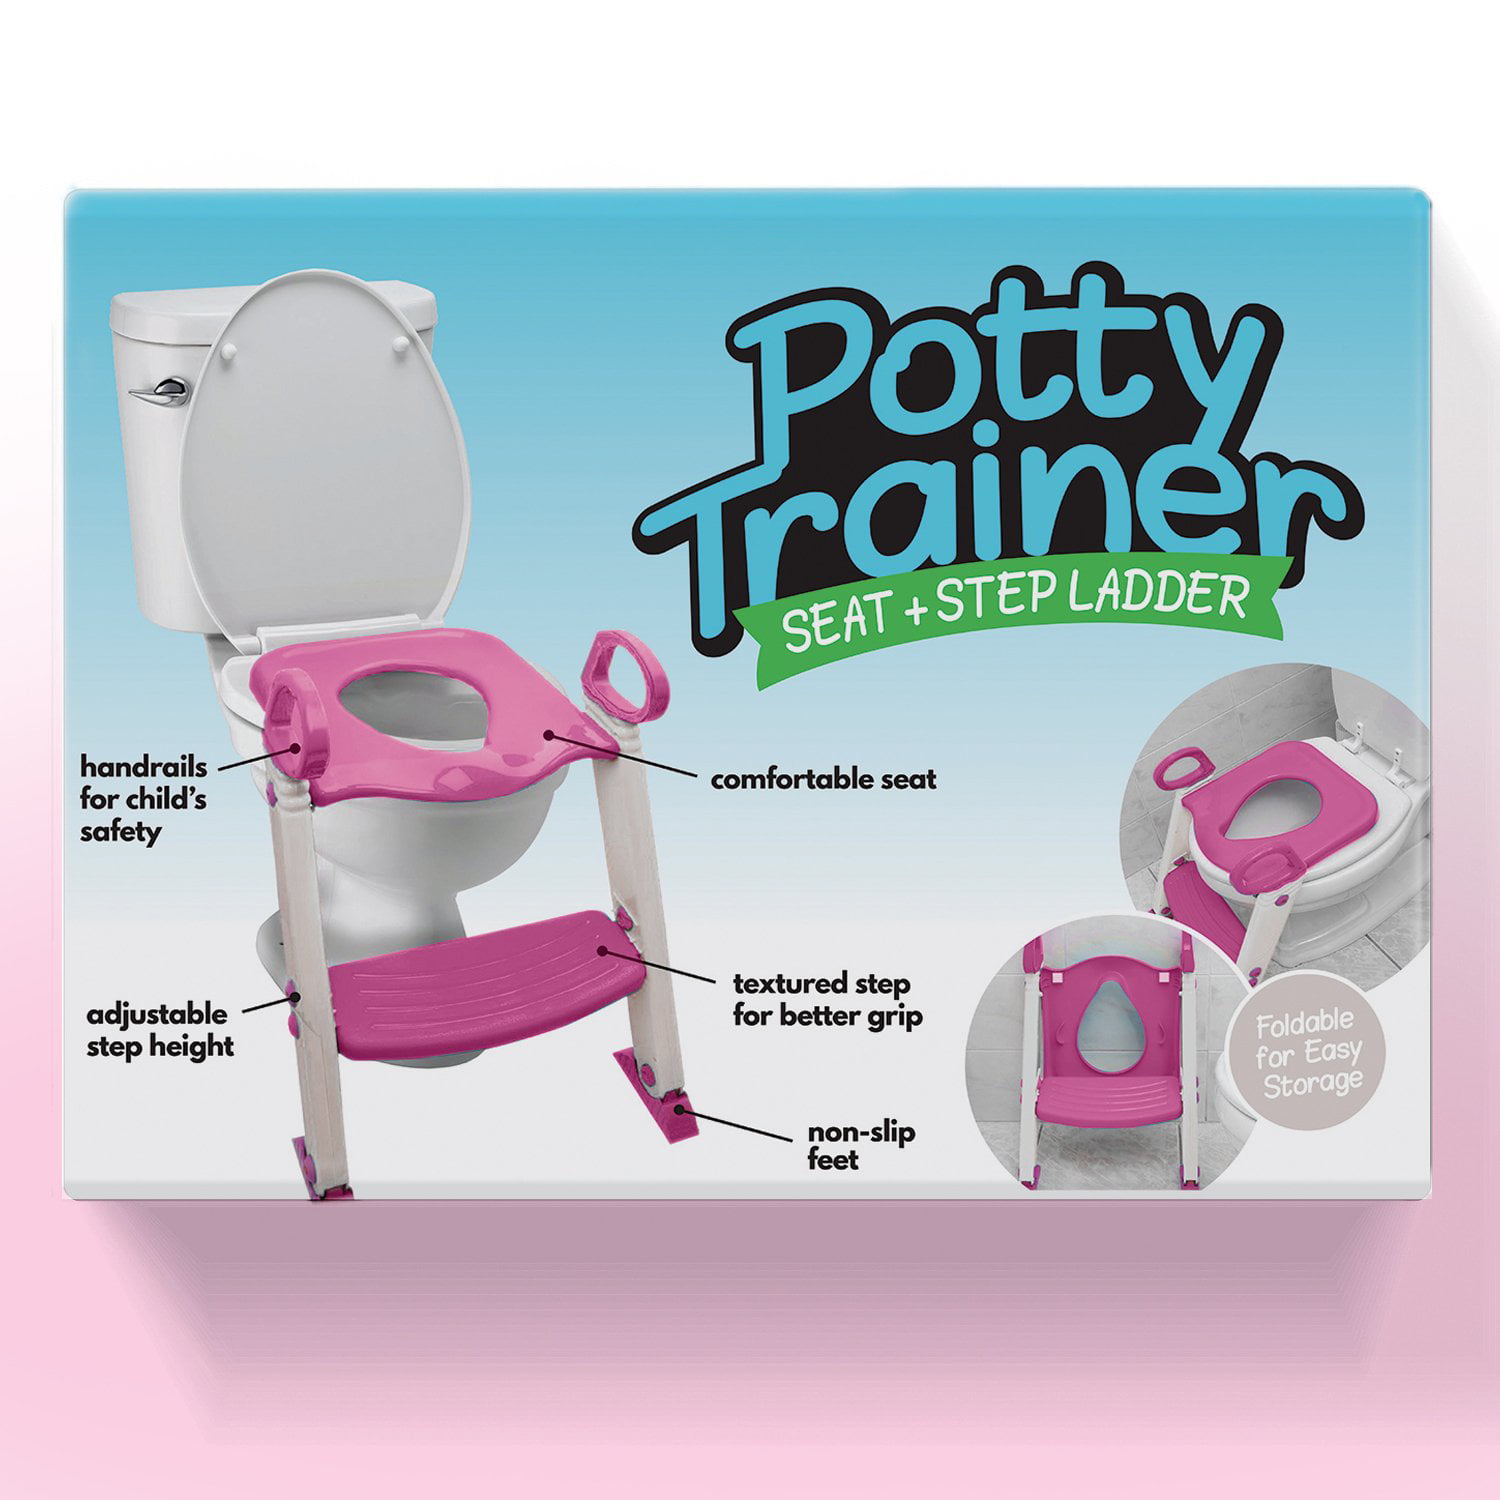 Potty Training Seat Toilet w/Step Stool Ladder & Splash Guard, Kids